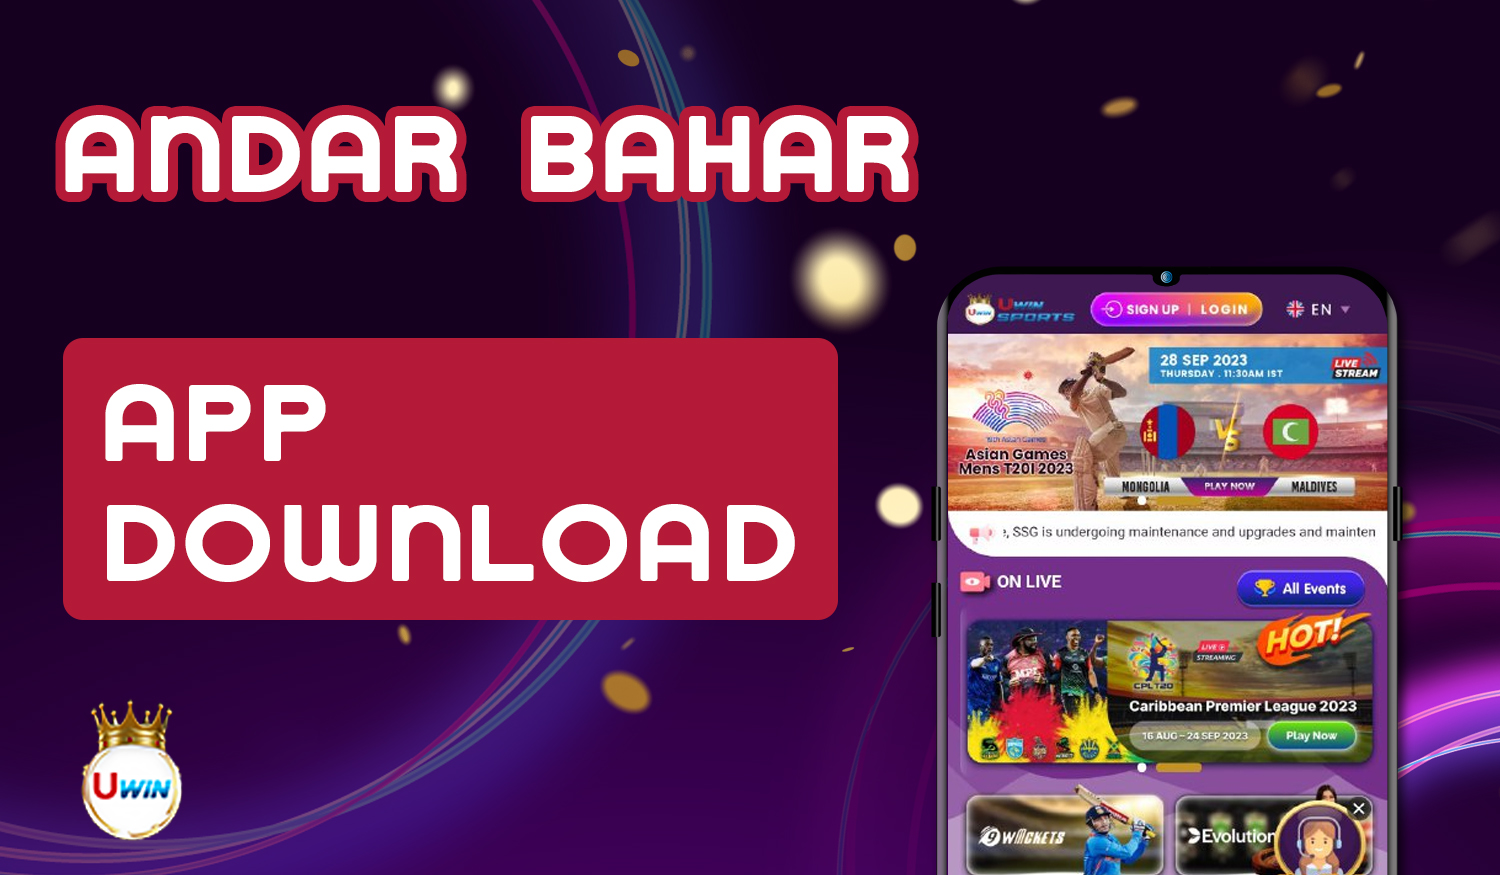 Play Andar Bahar using the Uwin casino mobile app